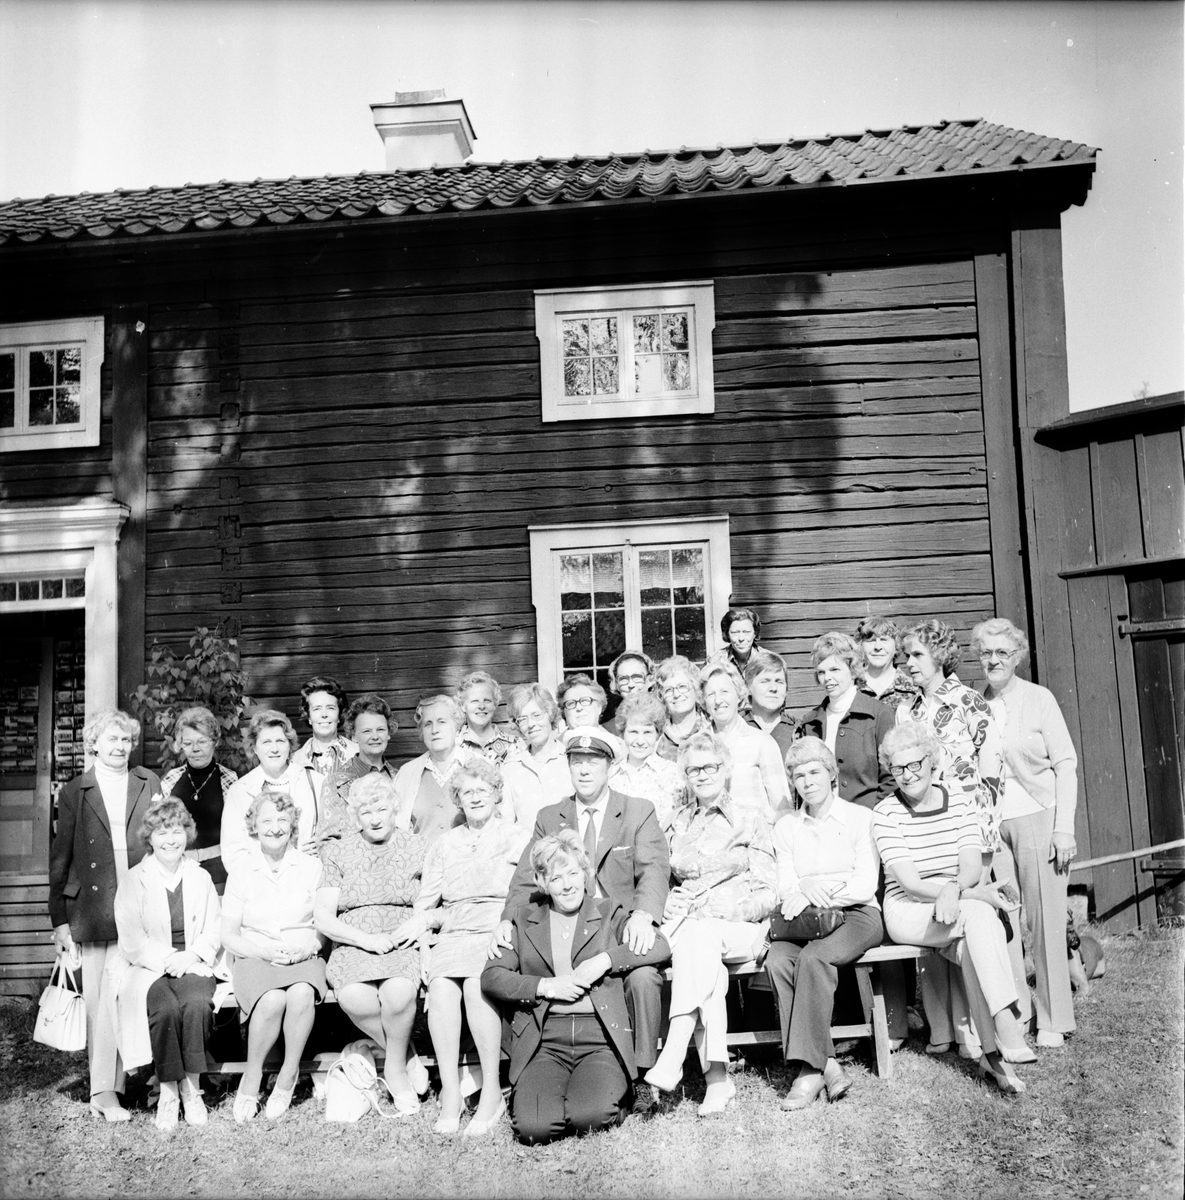 Fornhemmet,
Bussresenärer,
Gösta Gigg,
Augusti 1973